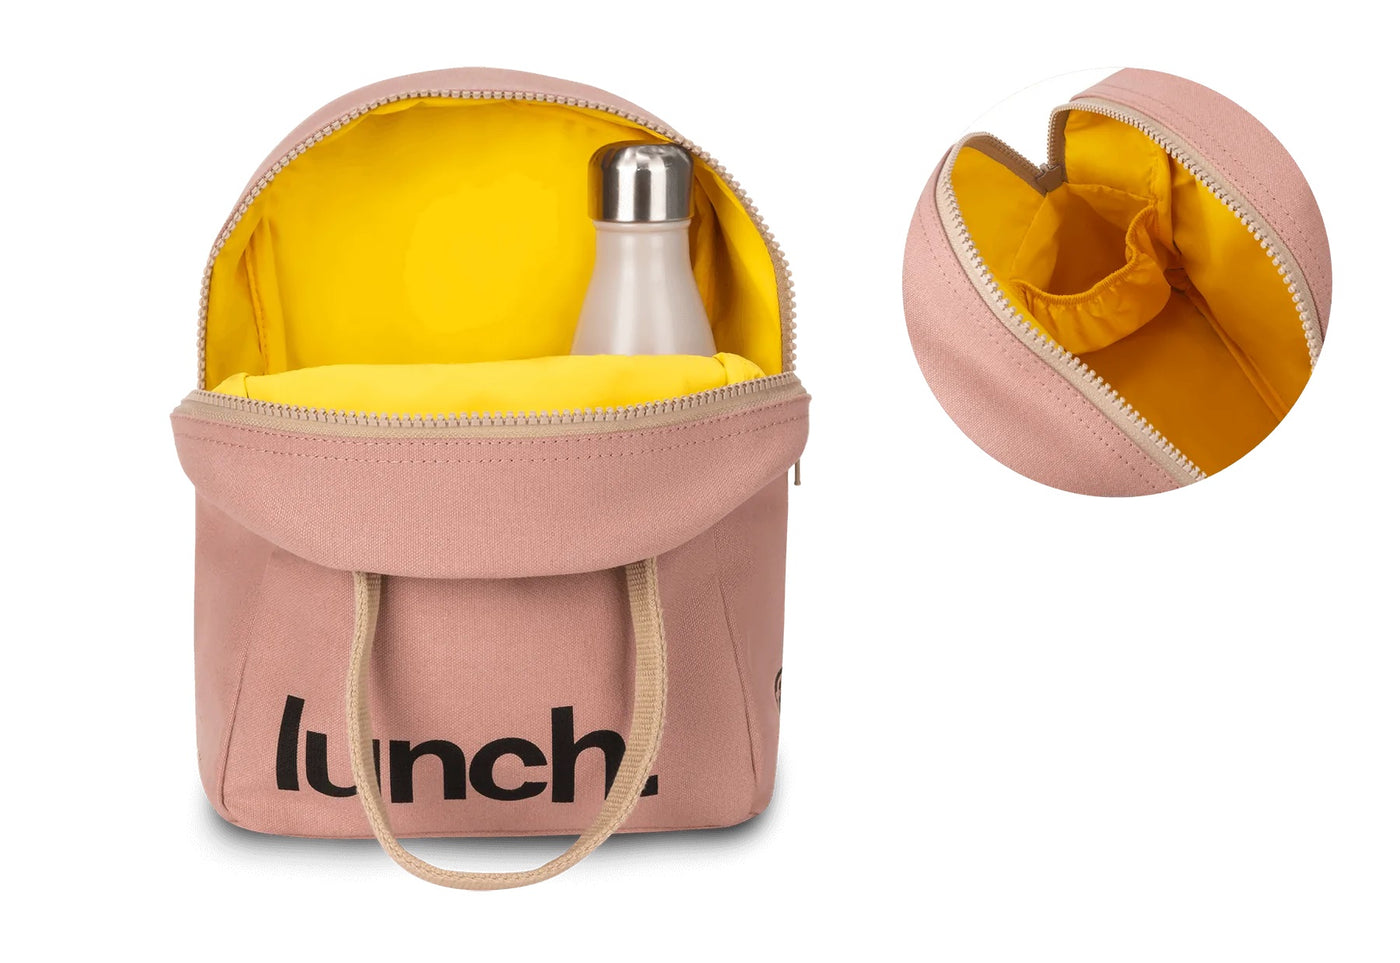 Fluf Lunch Bag With Zipper - Mauve